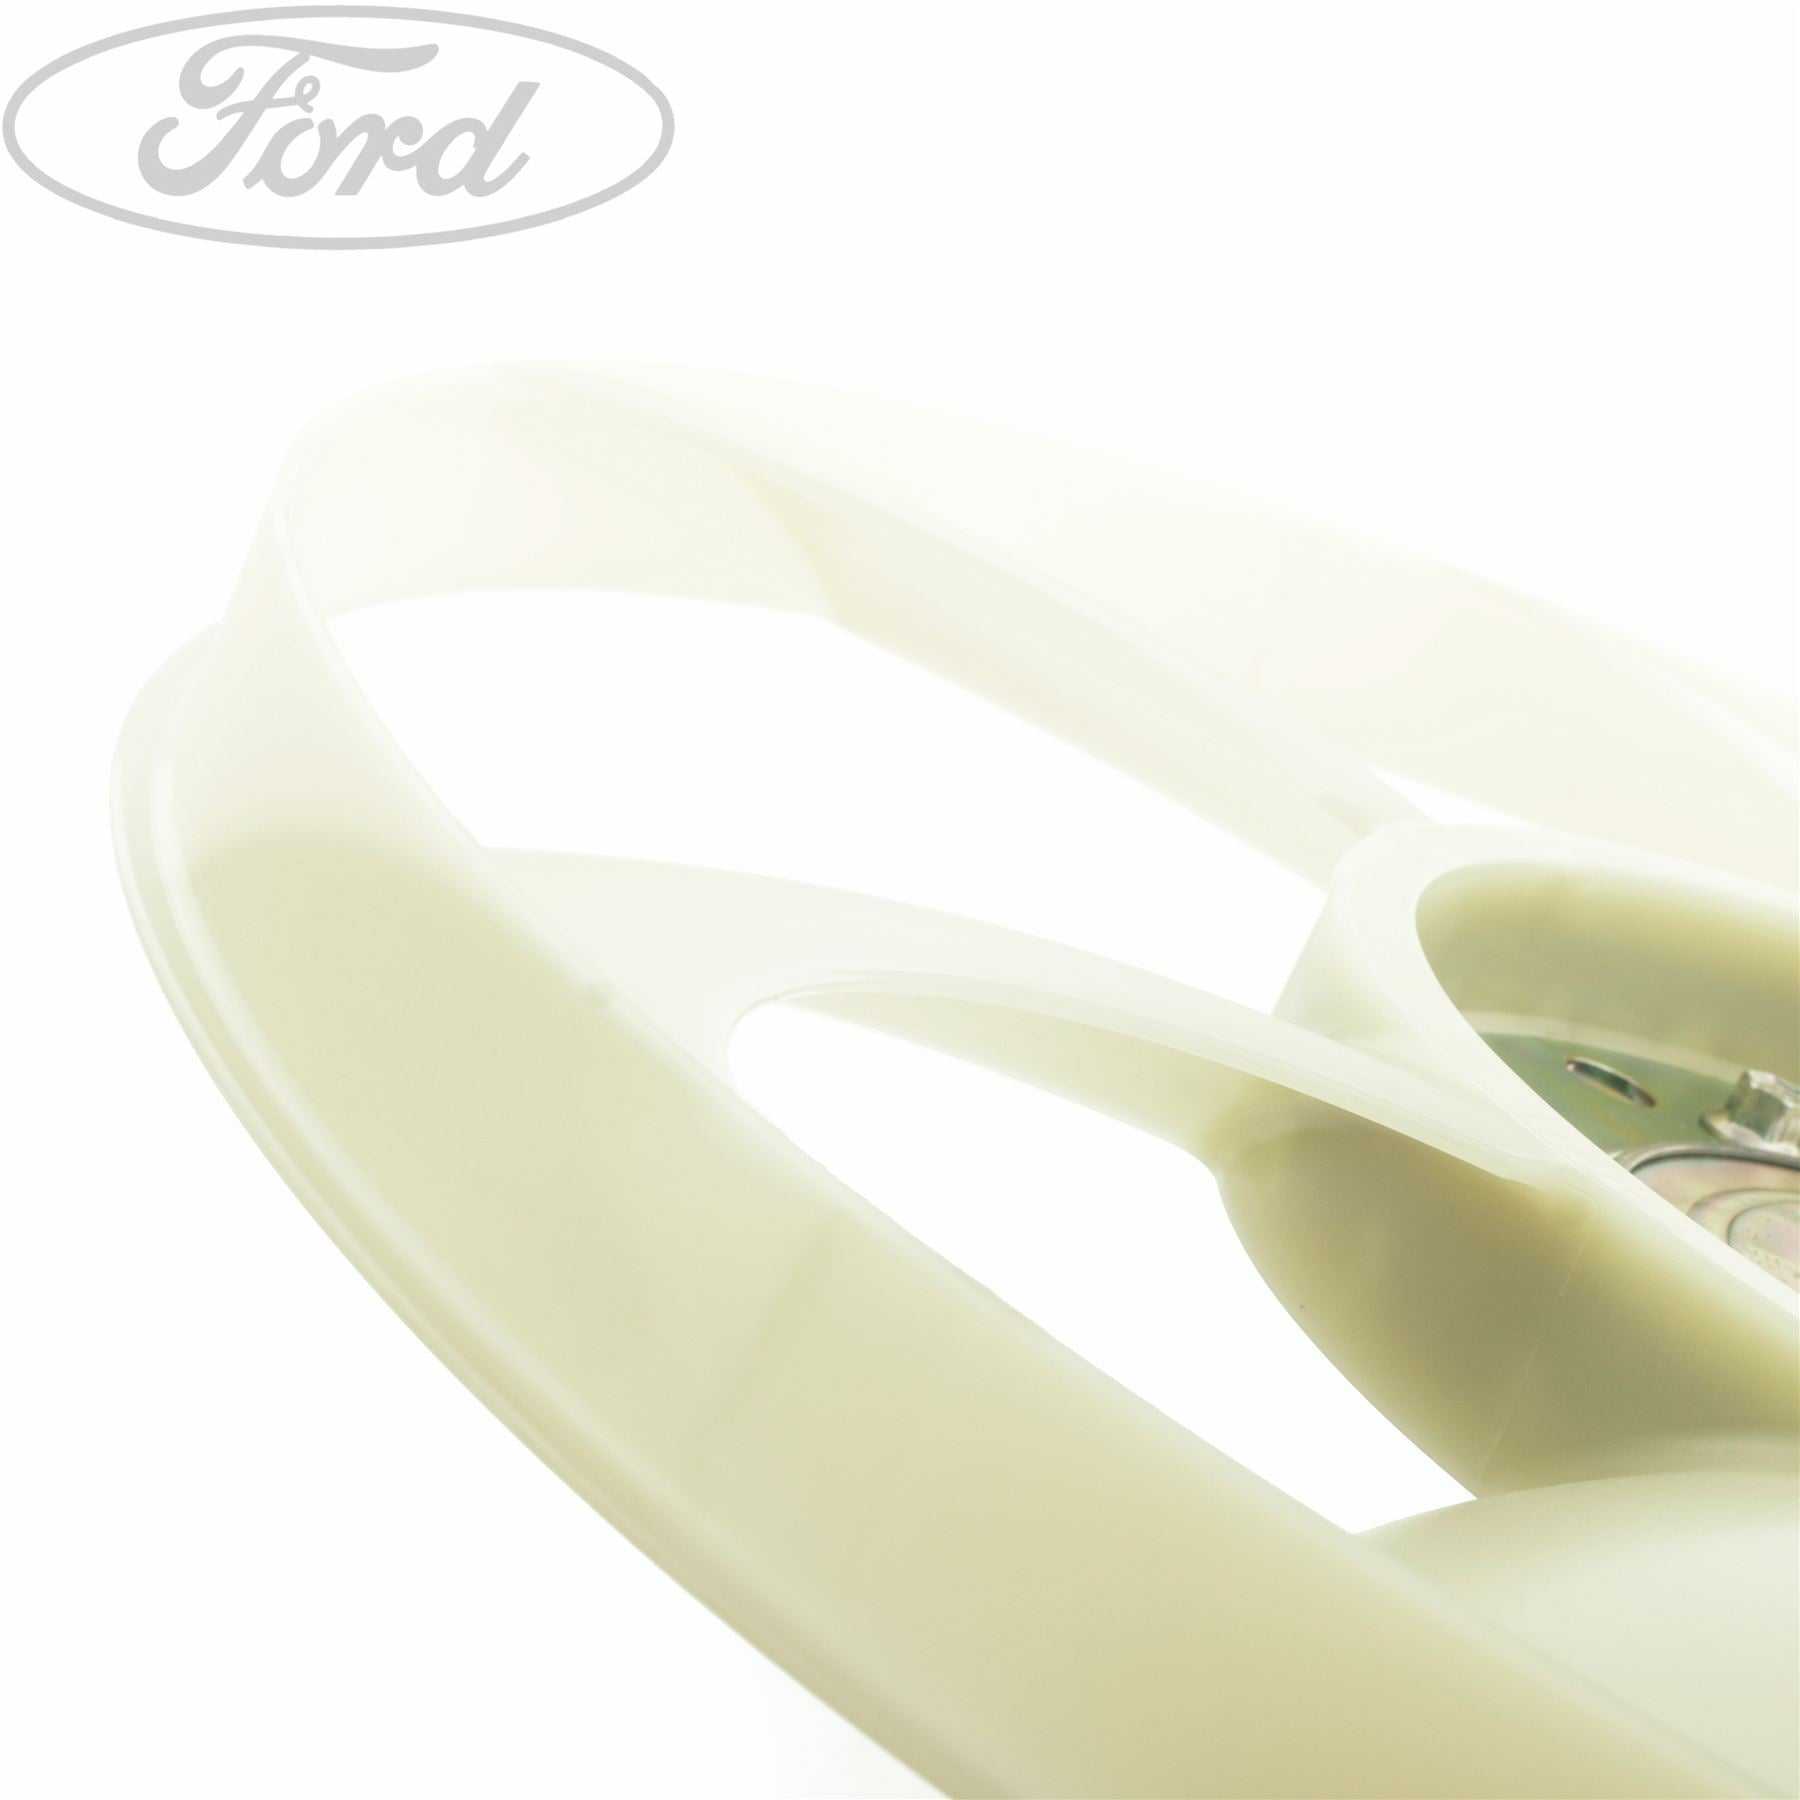 Ford, TRANSIT 2.2 2.4 TDCI ENGINE COOLING FAN 2006-2014